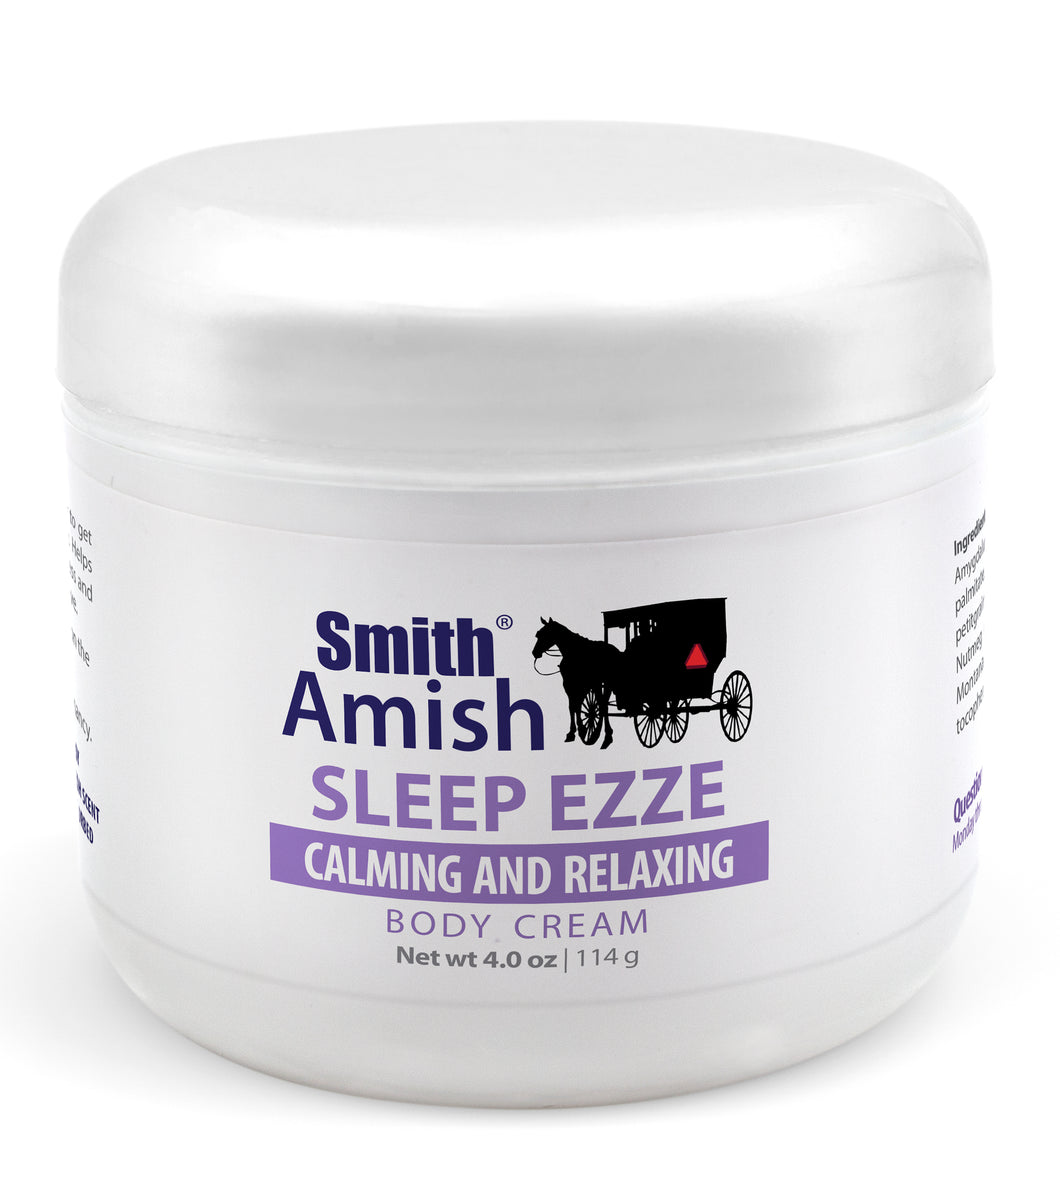 Smith Amish Sleep Ezze Body Cream 4 oz jar.